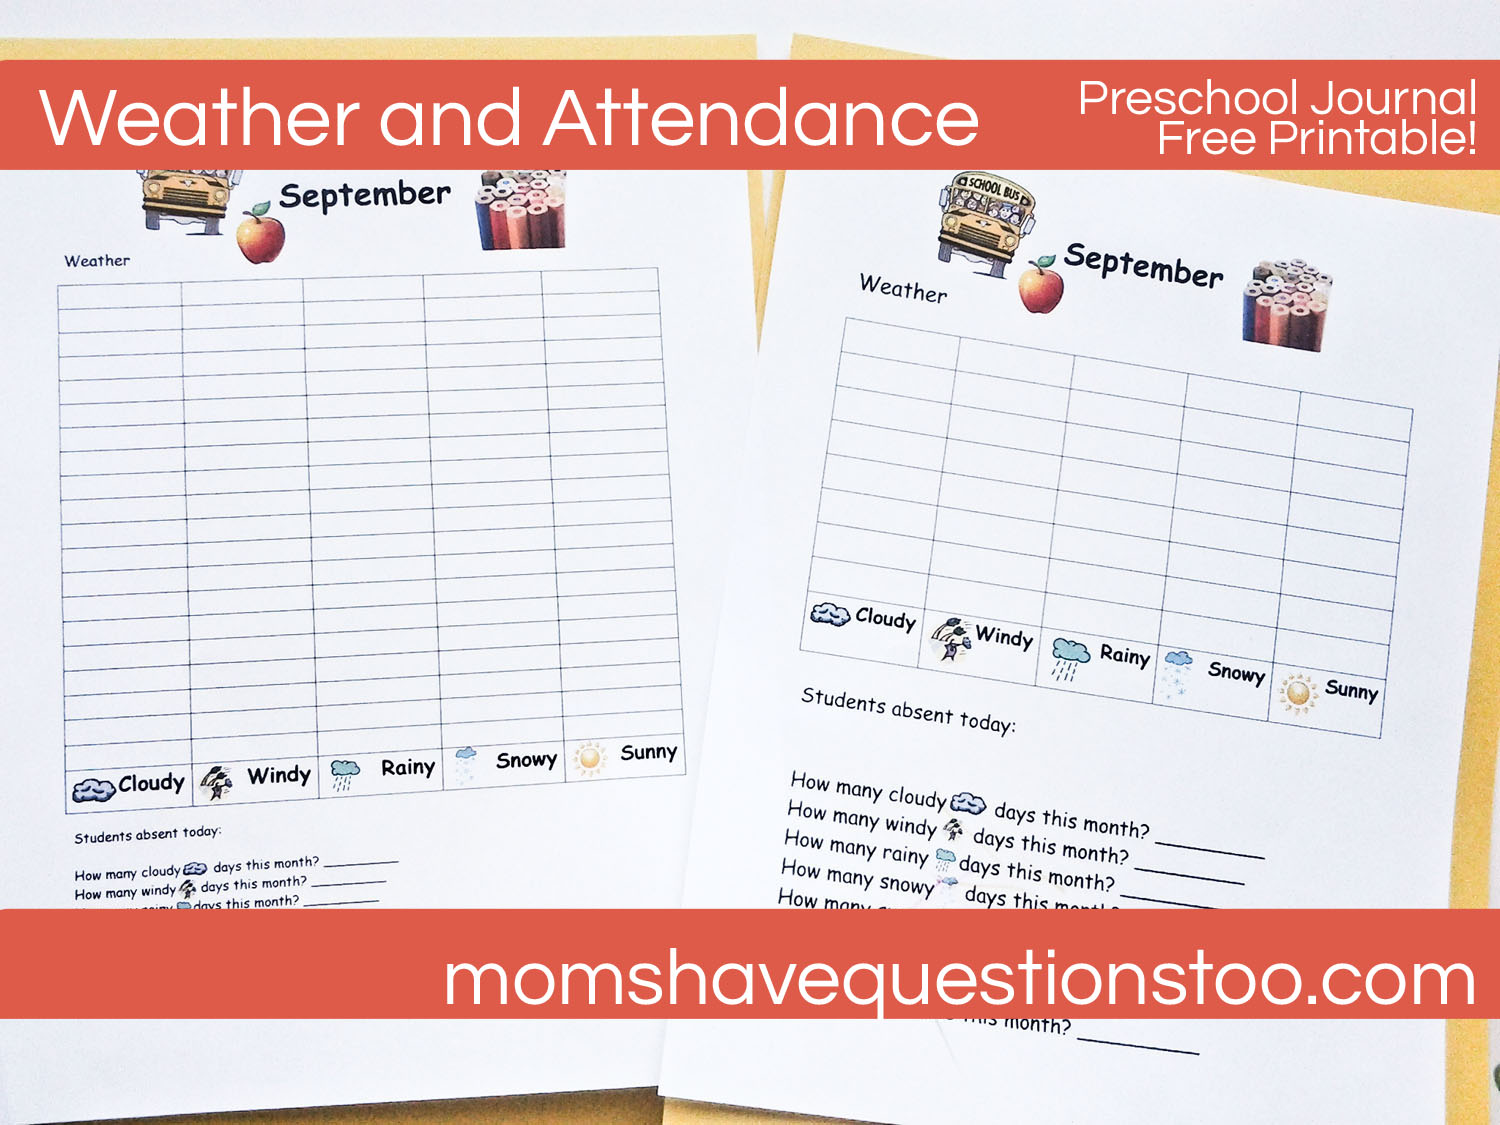 Weather and Attendance Preschool Journal